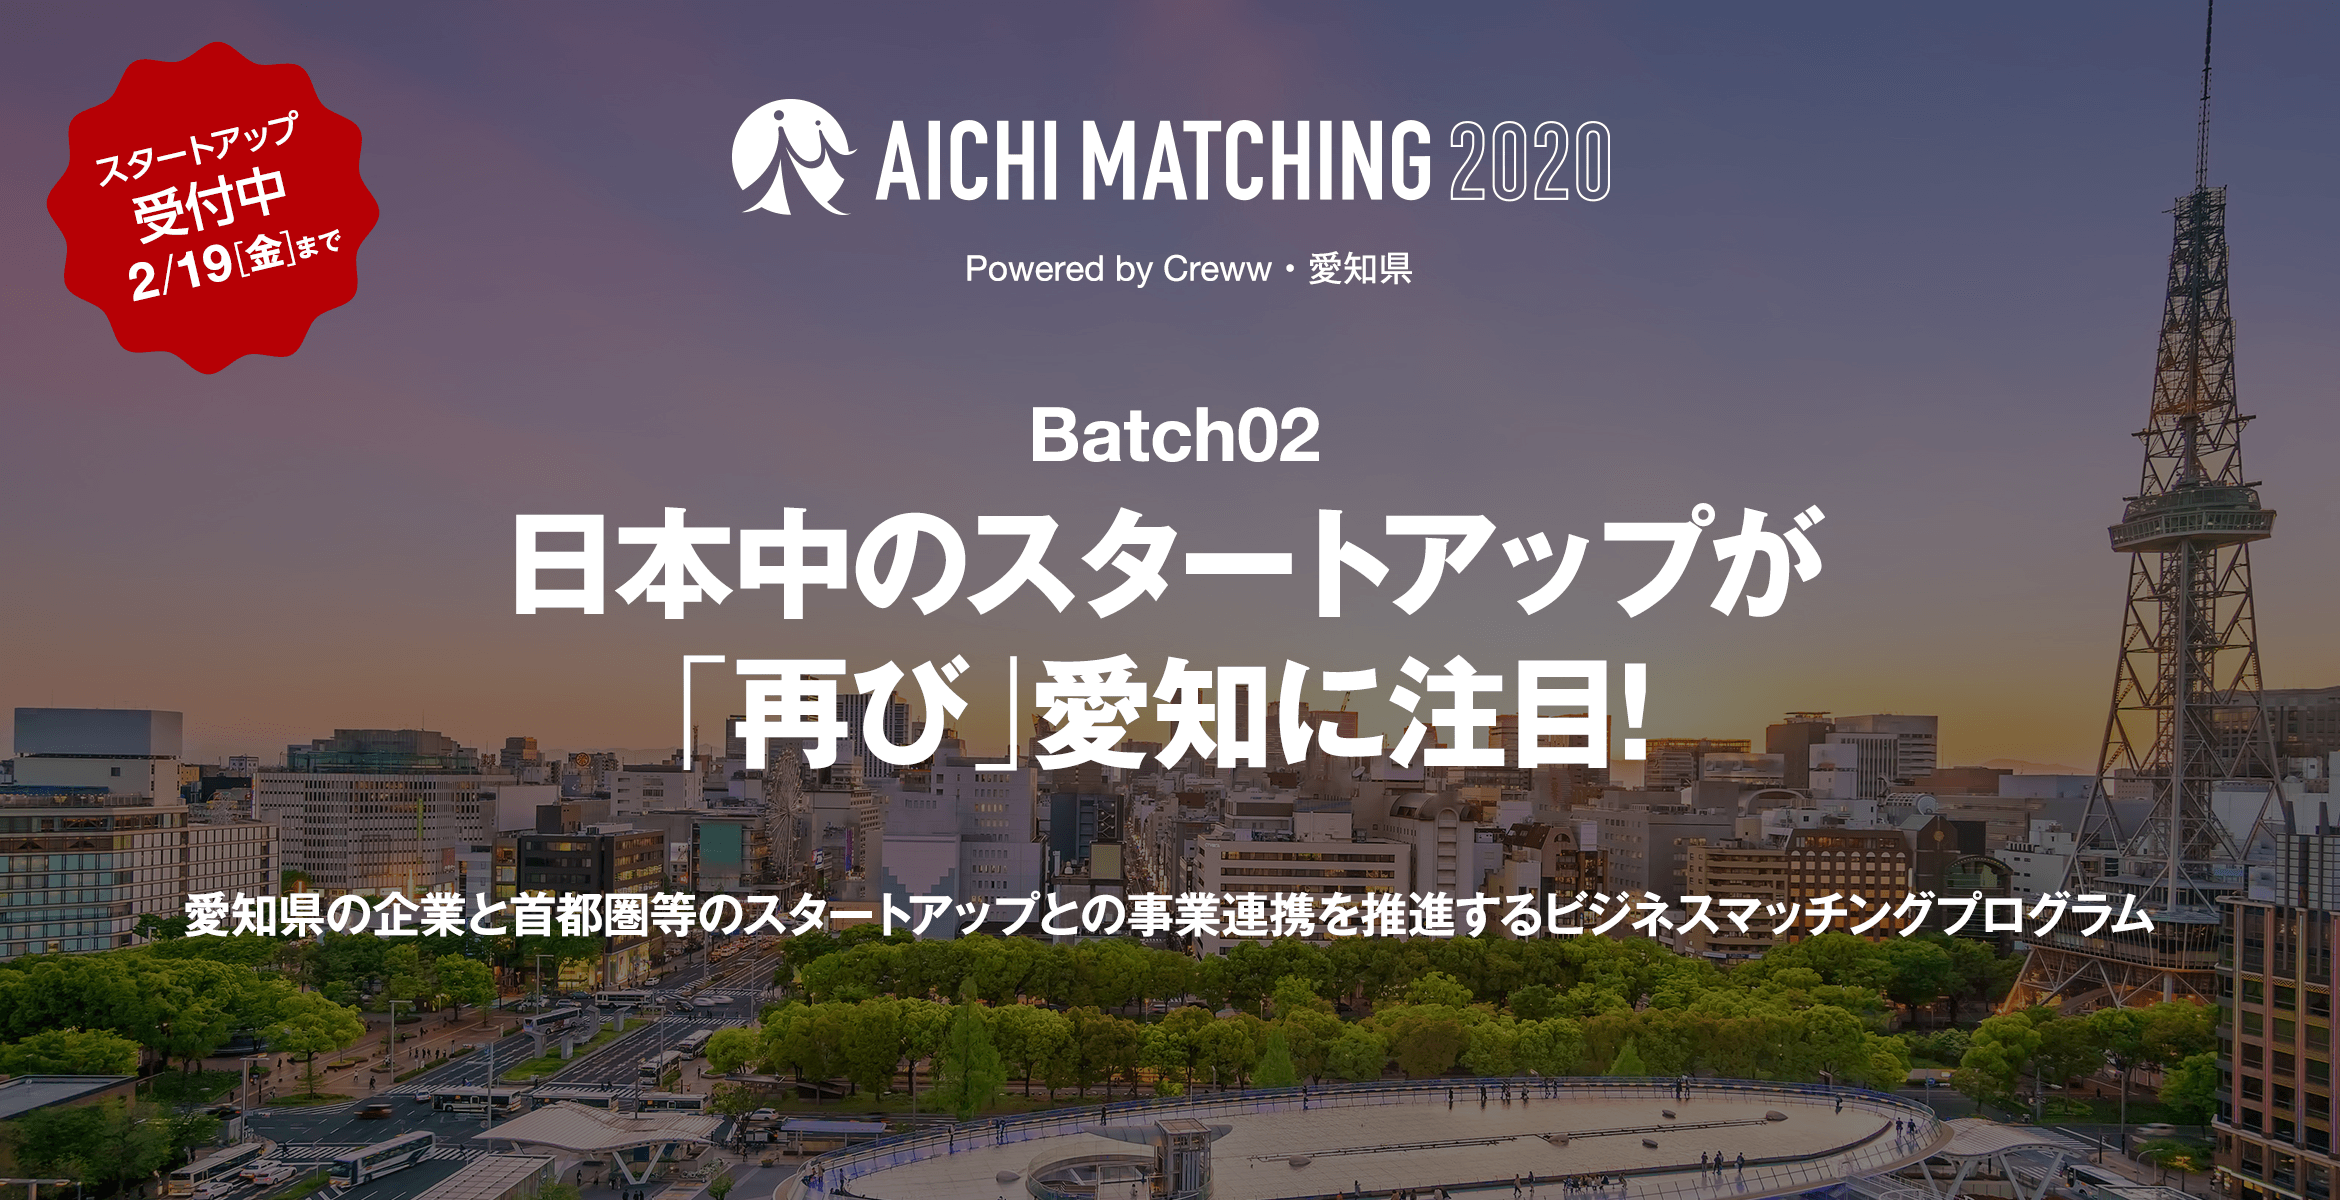 AICHI MATCHING 日本中のスタートアップが愛知に注目!